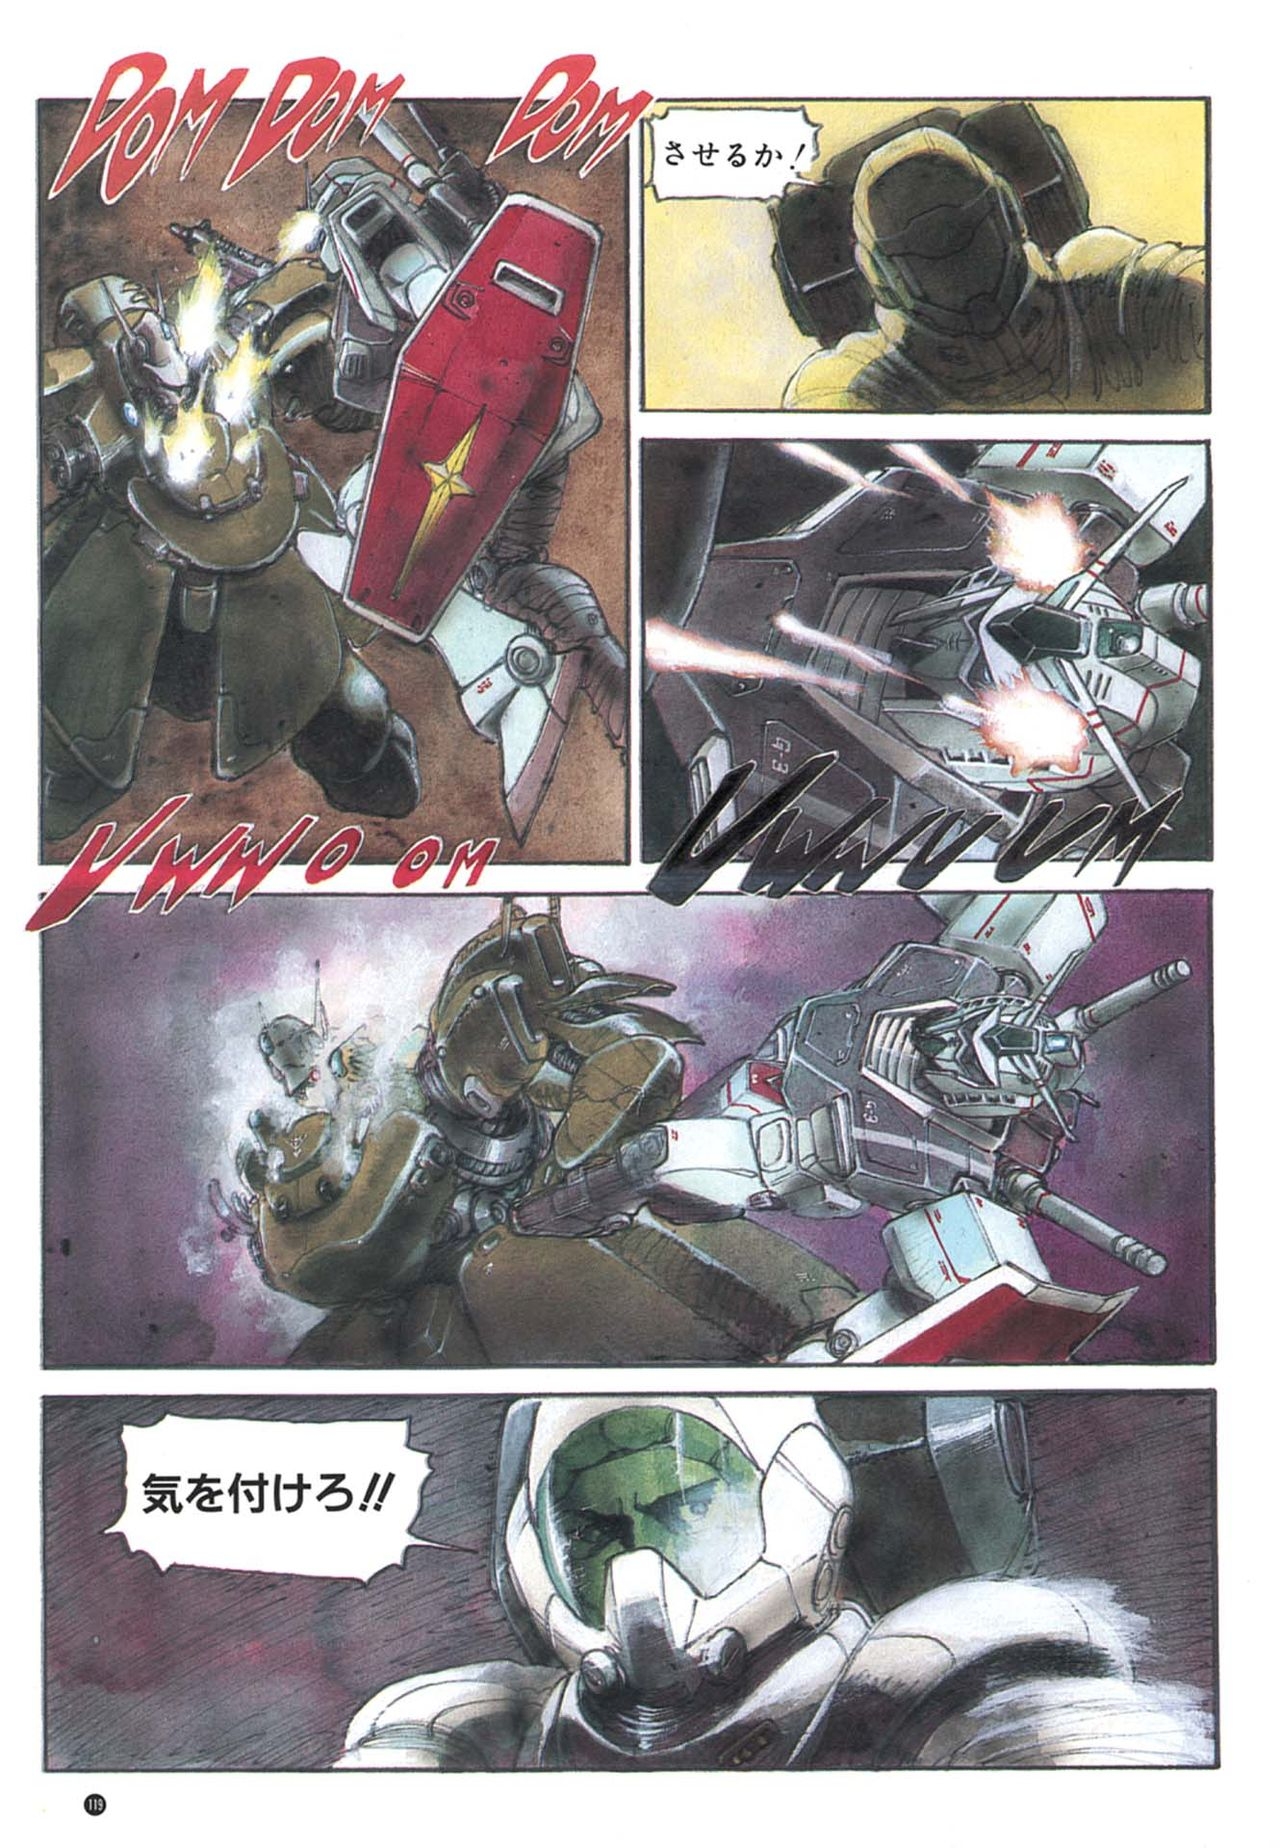 [Kazuhisa Kondo] Kazuhisa Kondo 2D & 3D Works - Go Ahead - From Mobile Suit Gundam to Original Mechanism 118